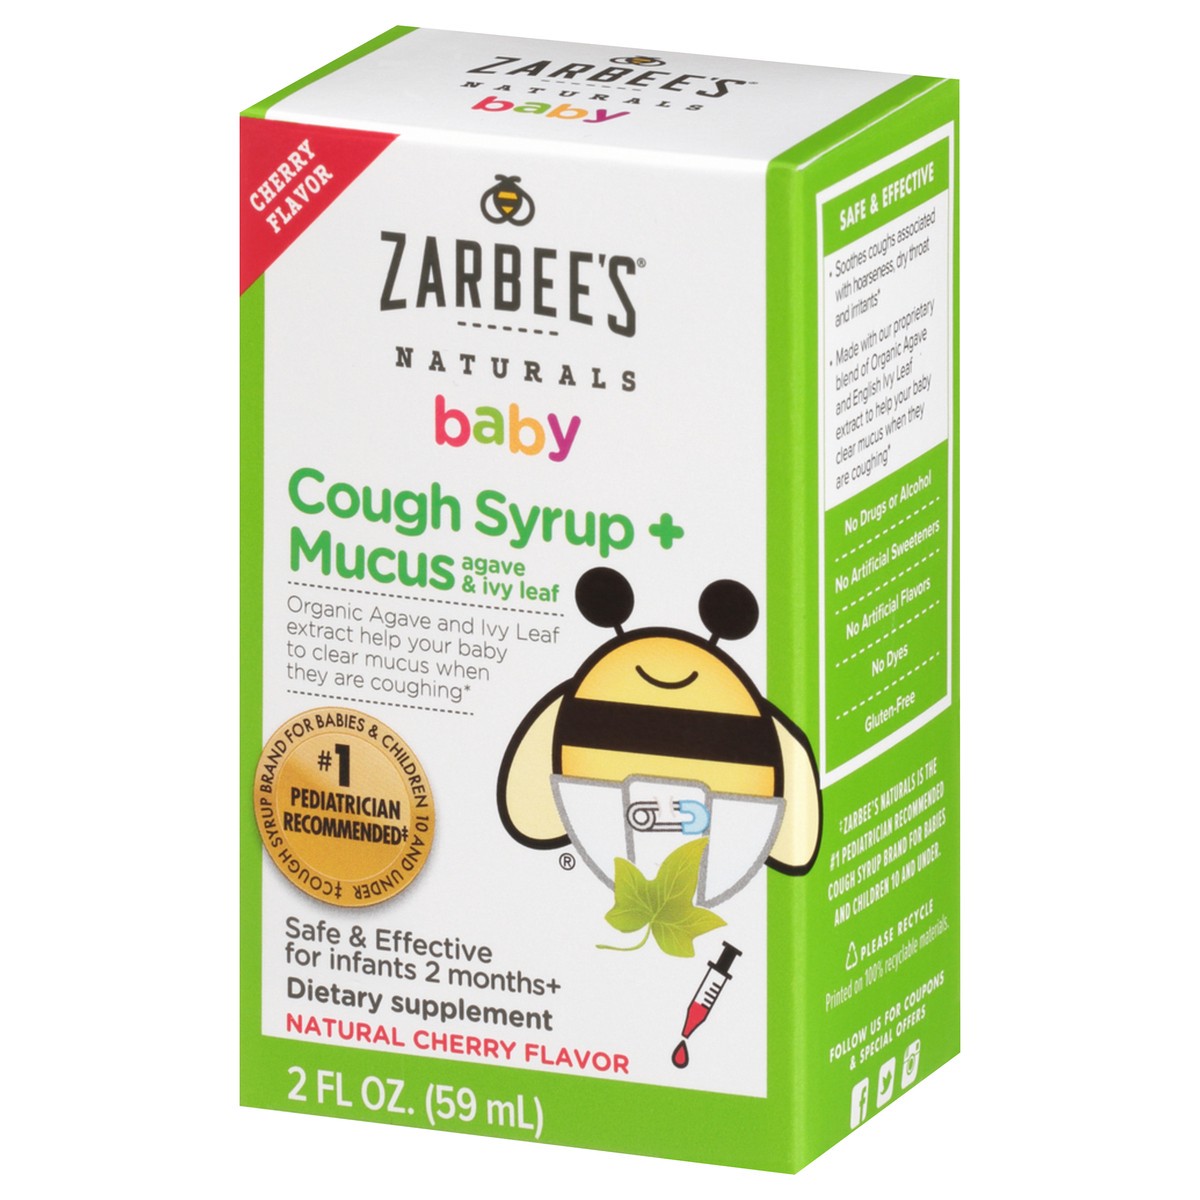 slide 3 of 9, Zarbee's Naturals Naturals Baby Natural Cherry Flavor Cough Syrup + Mucus 2 fl oz Box, 2 fl oz